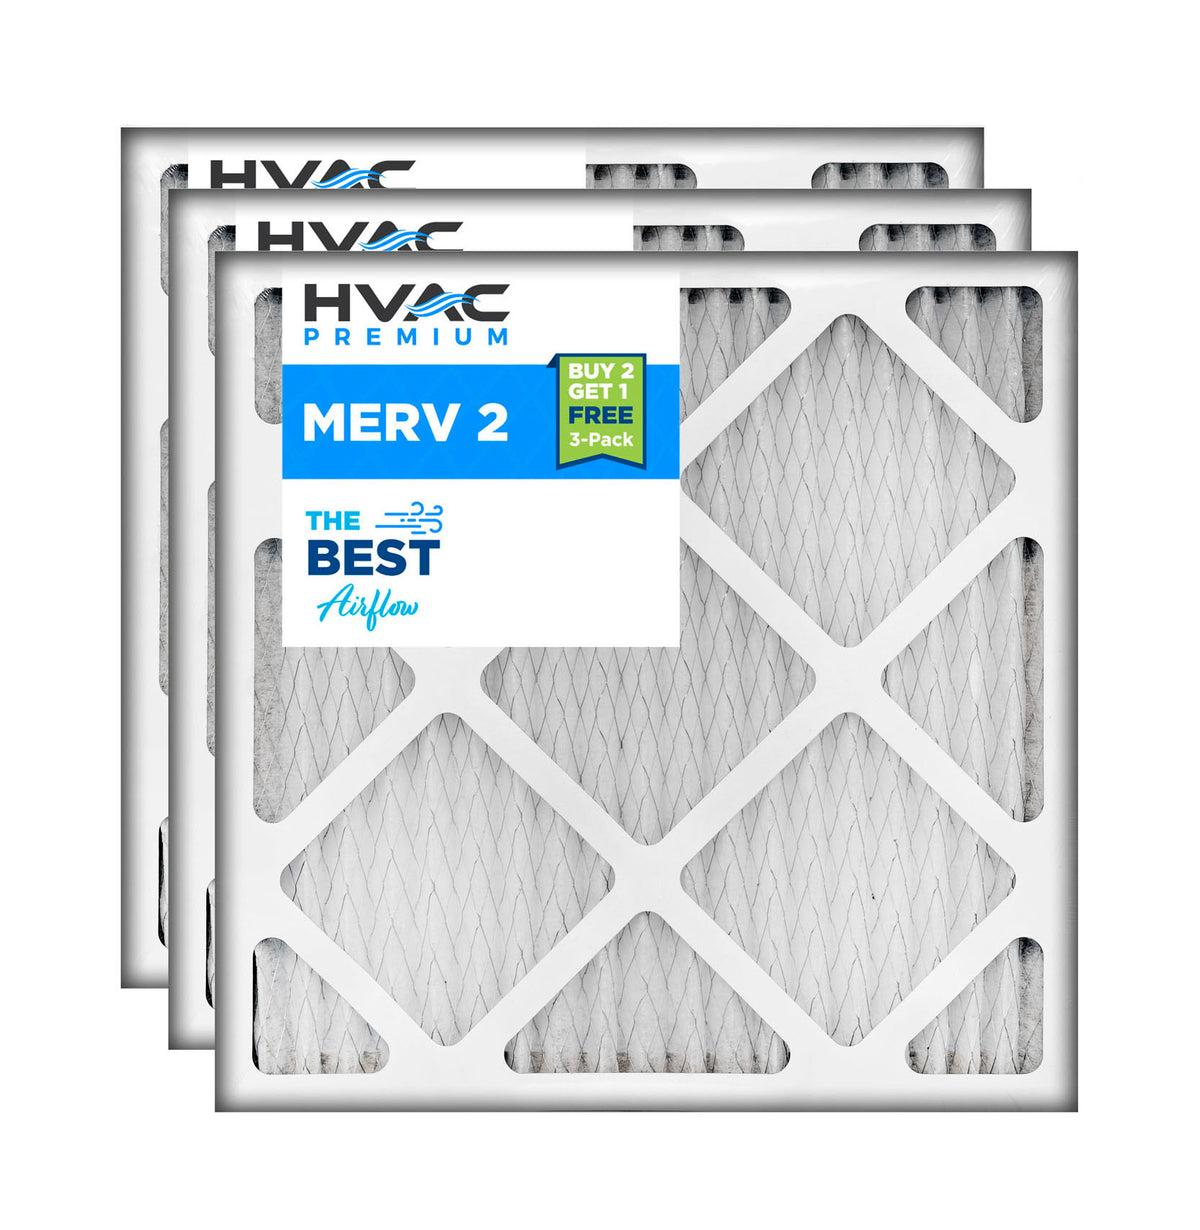 14 x 20 Merv 2 HVAC Pleated Filter, 3-Pack